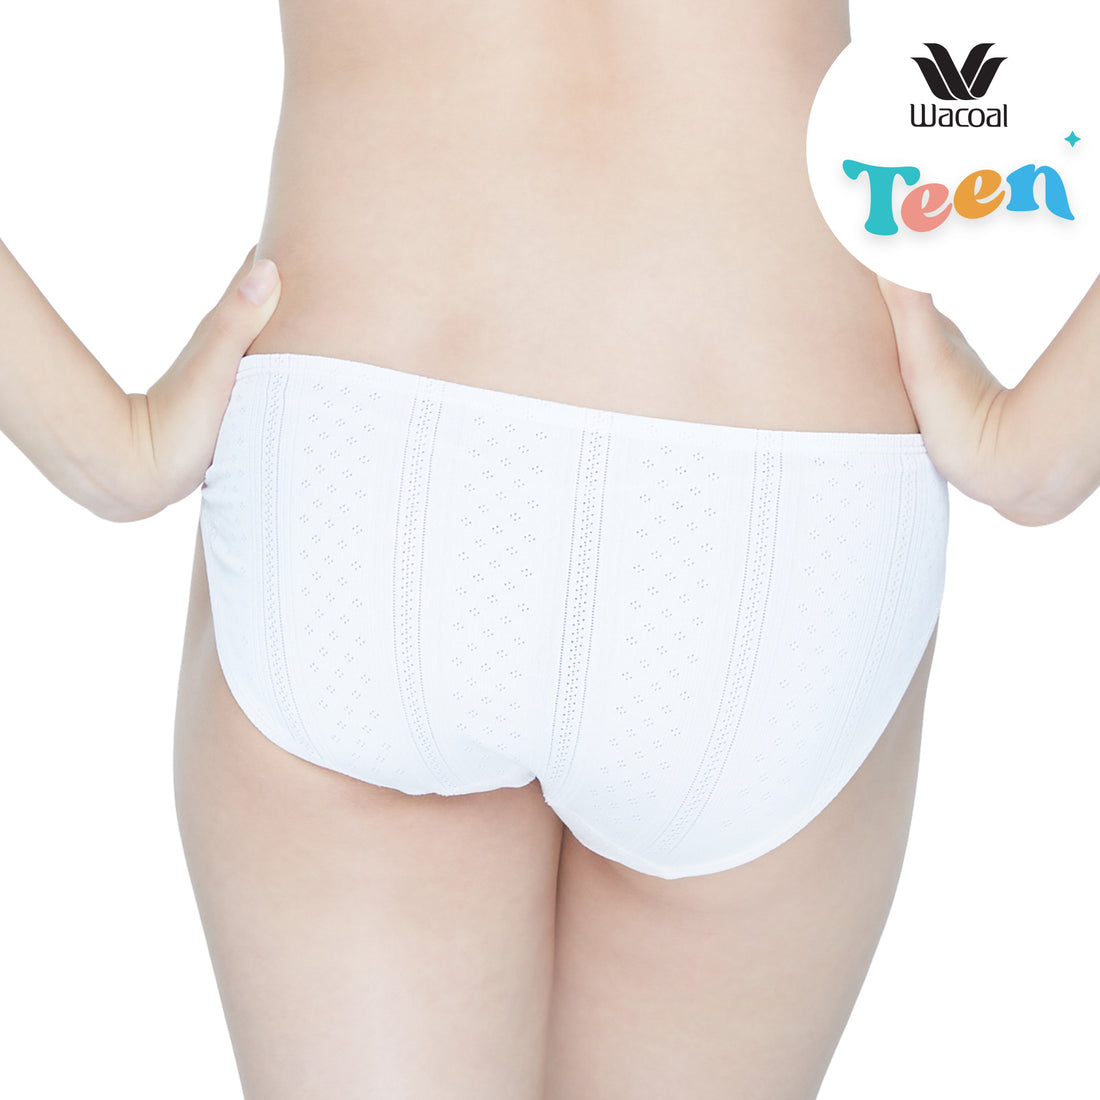 Wacoal Teen Bikini Panty กางเกงในสำหรับวัยใส รุ่น MUT305 สีขาว (WH)